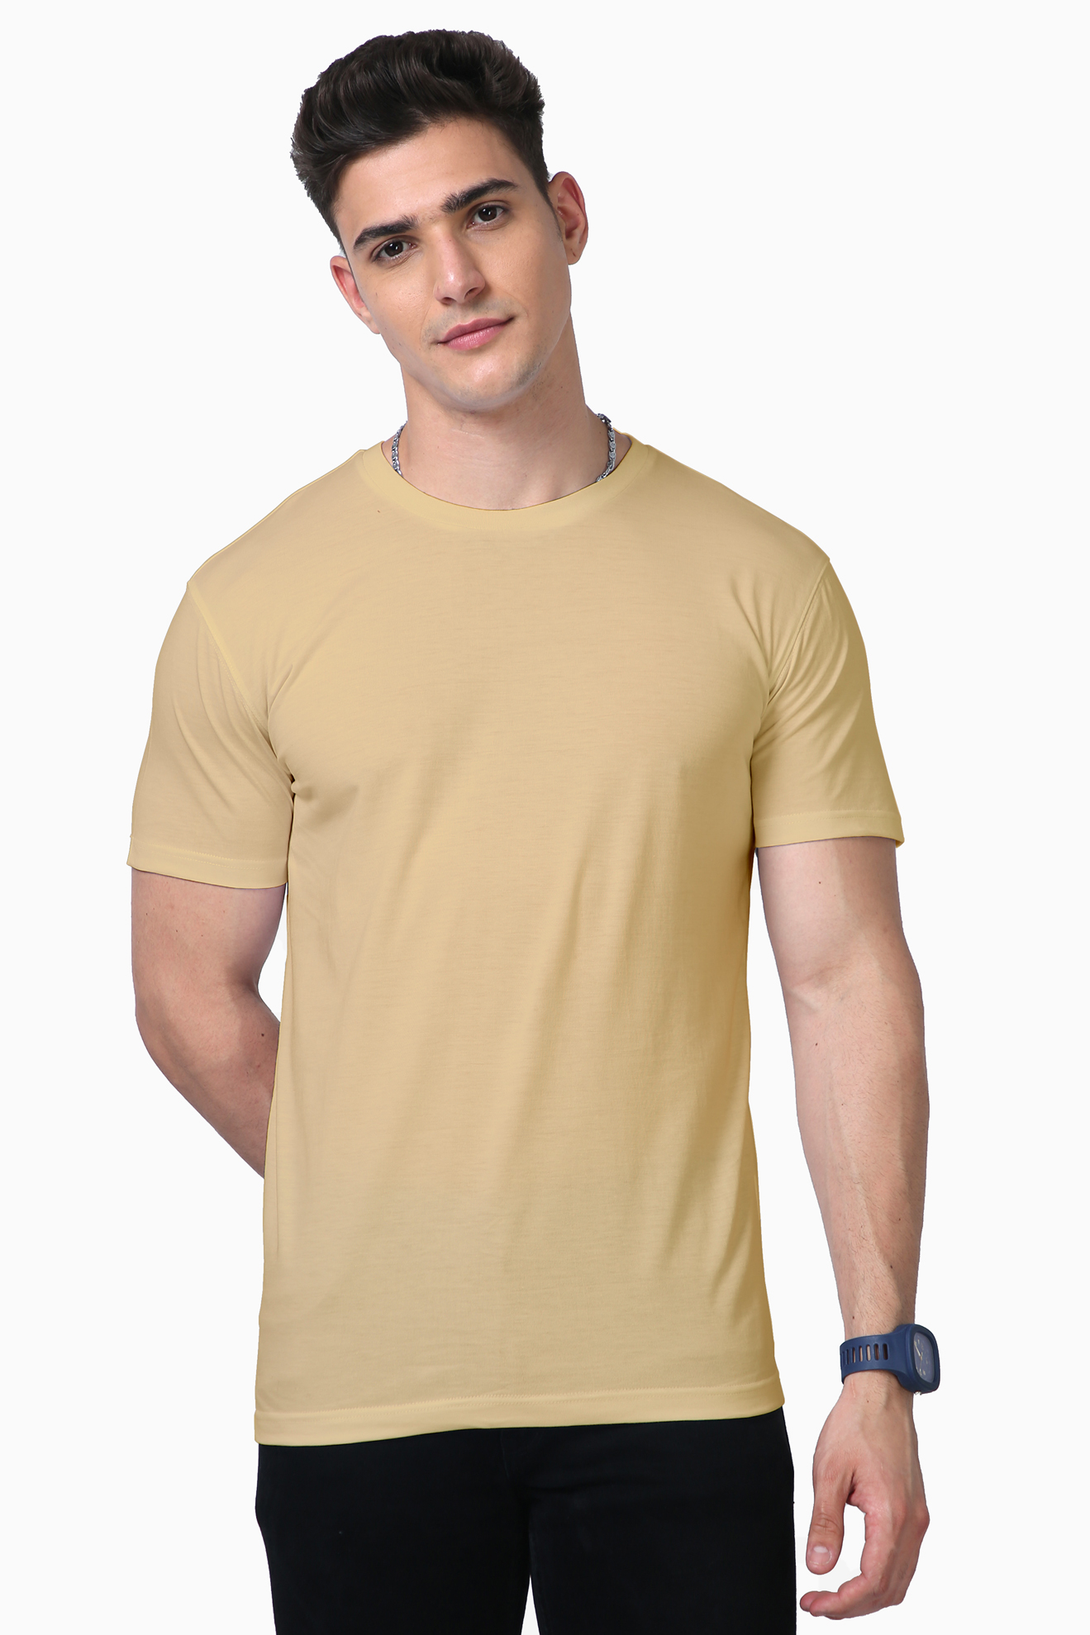 Plain Supima T-Shirts For Women - WowWaves - 5